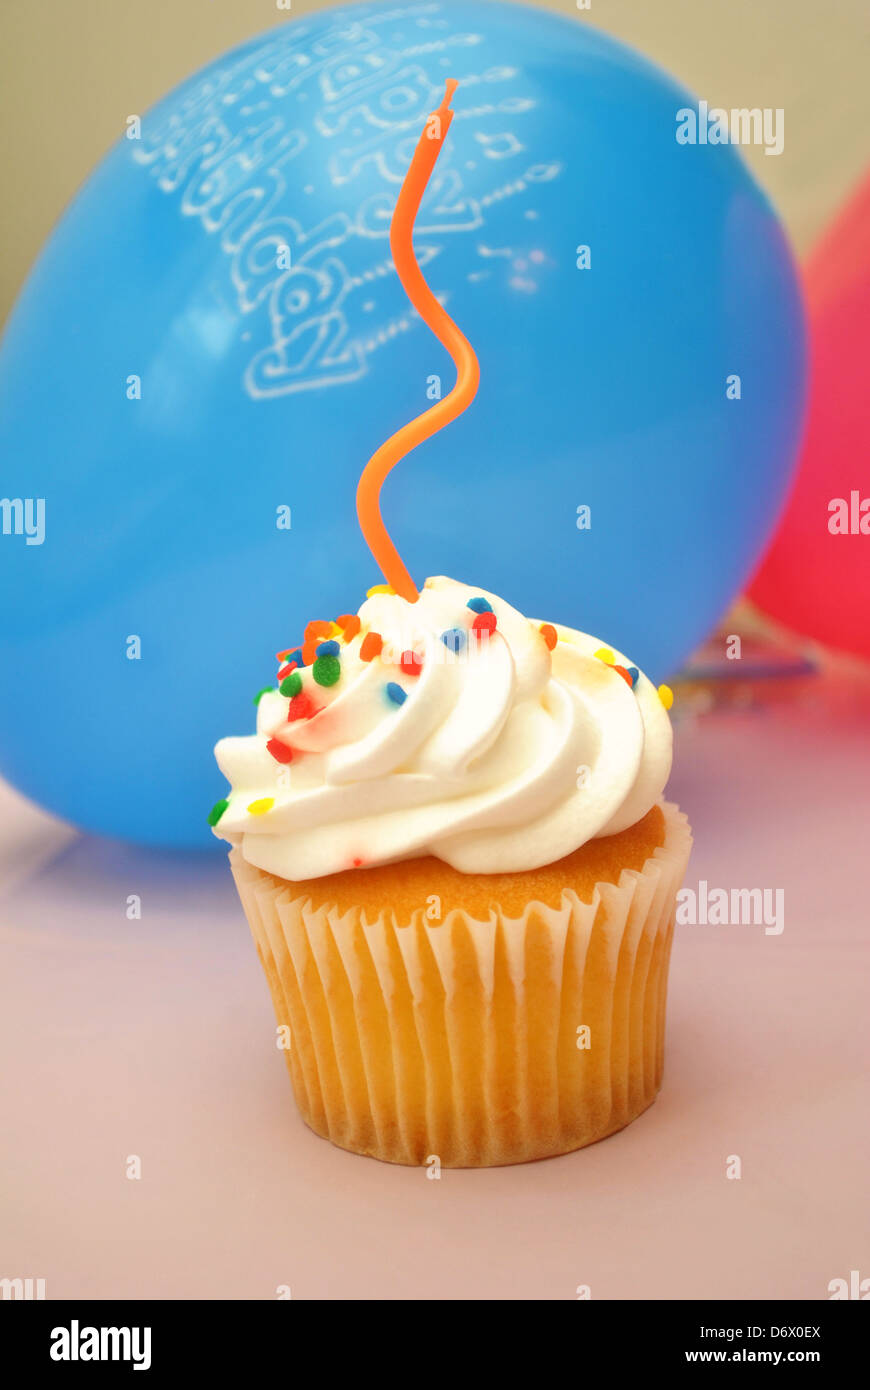 Birthday Cupcake with an Orange Candle Stock Photo